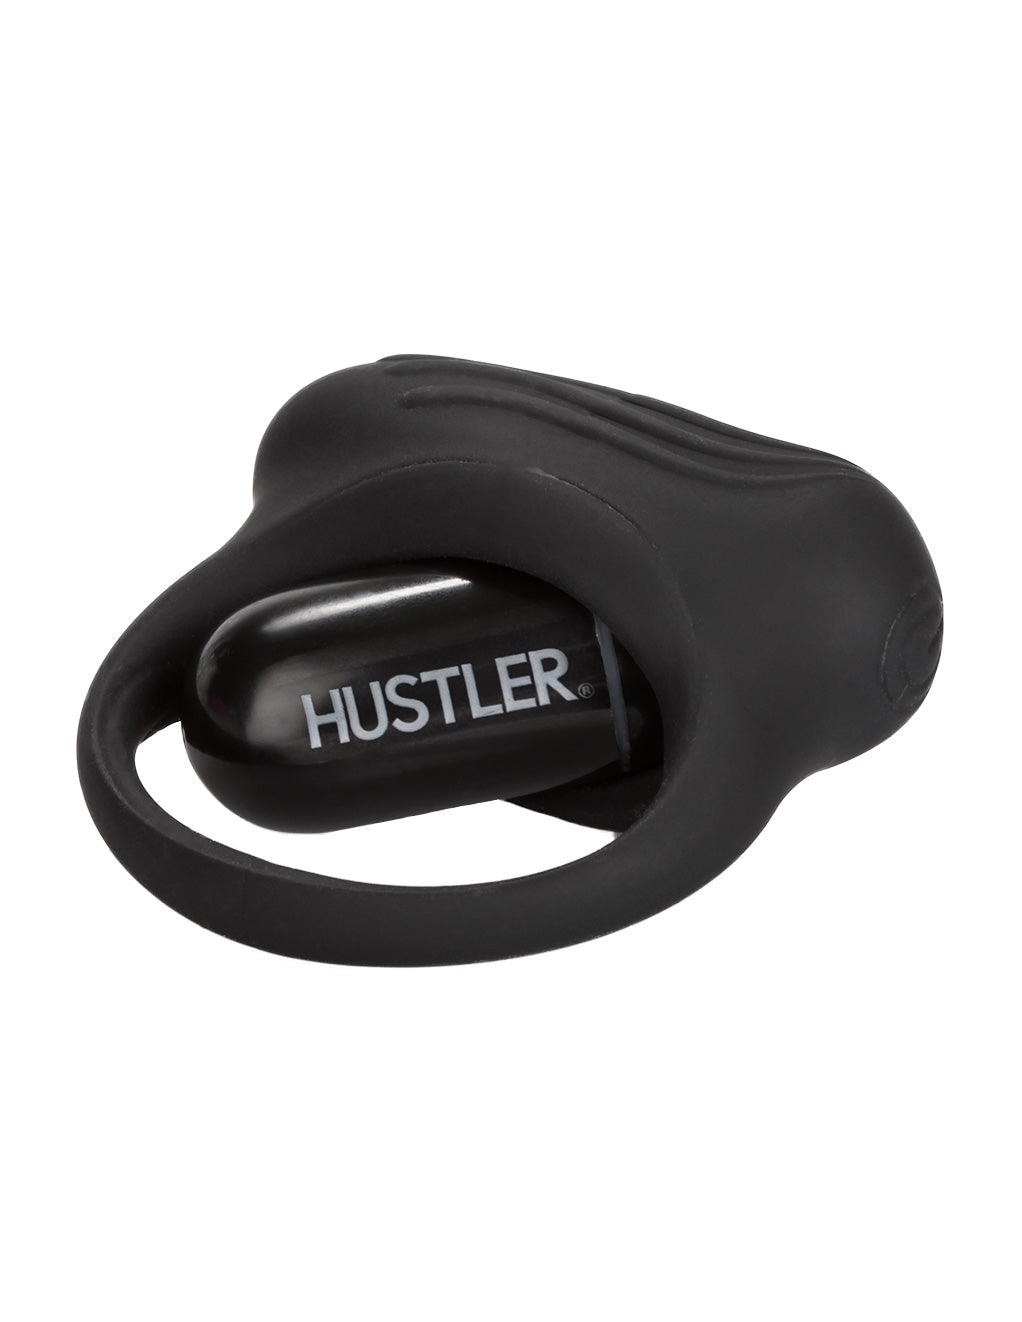 Hustler Playthings Vibrating Silicone Cockring - Novelties - Cockring